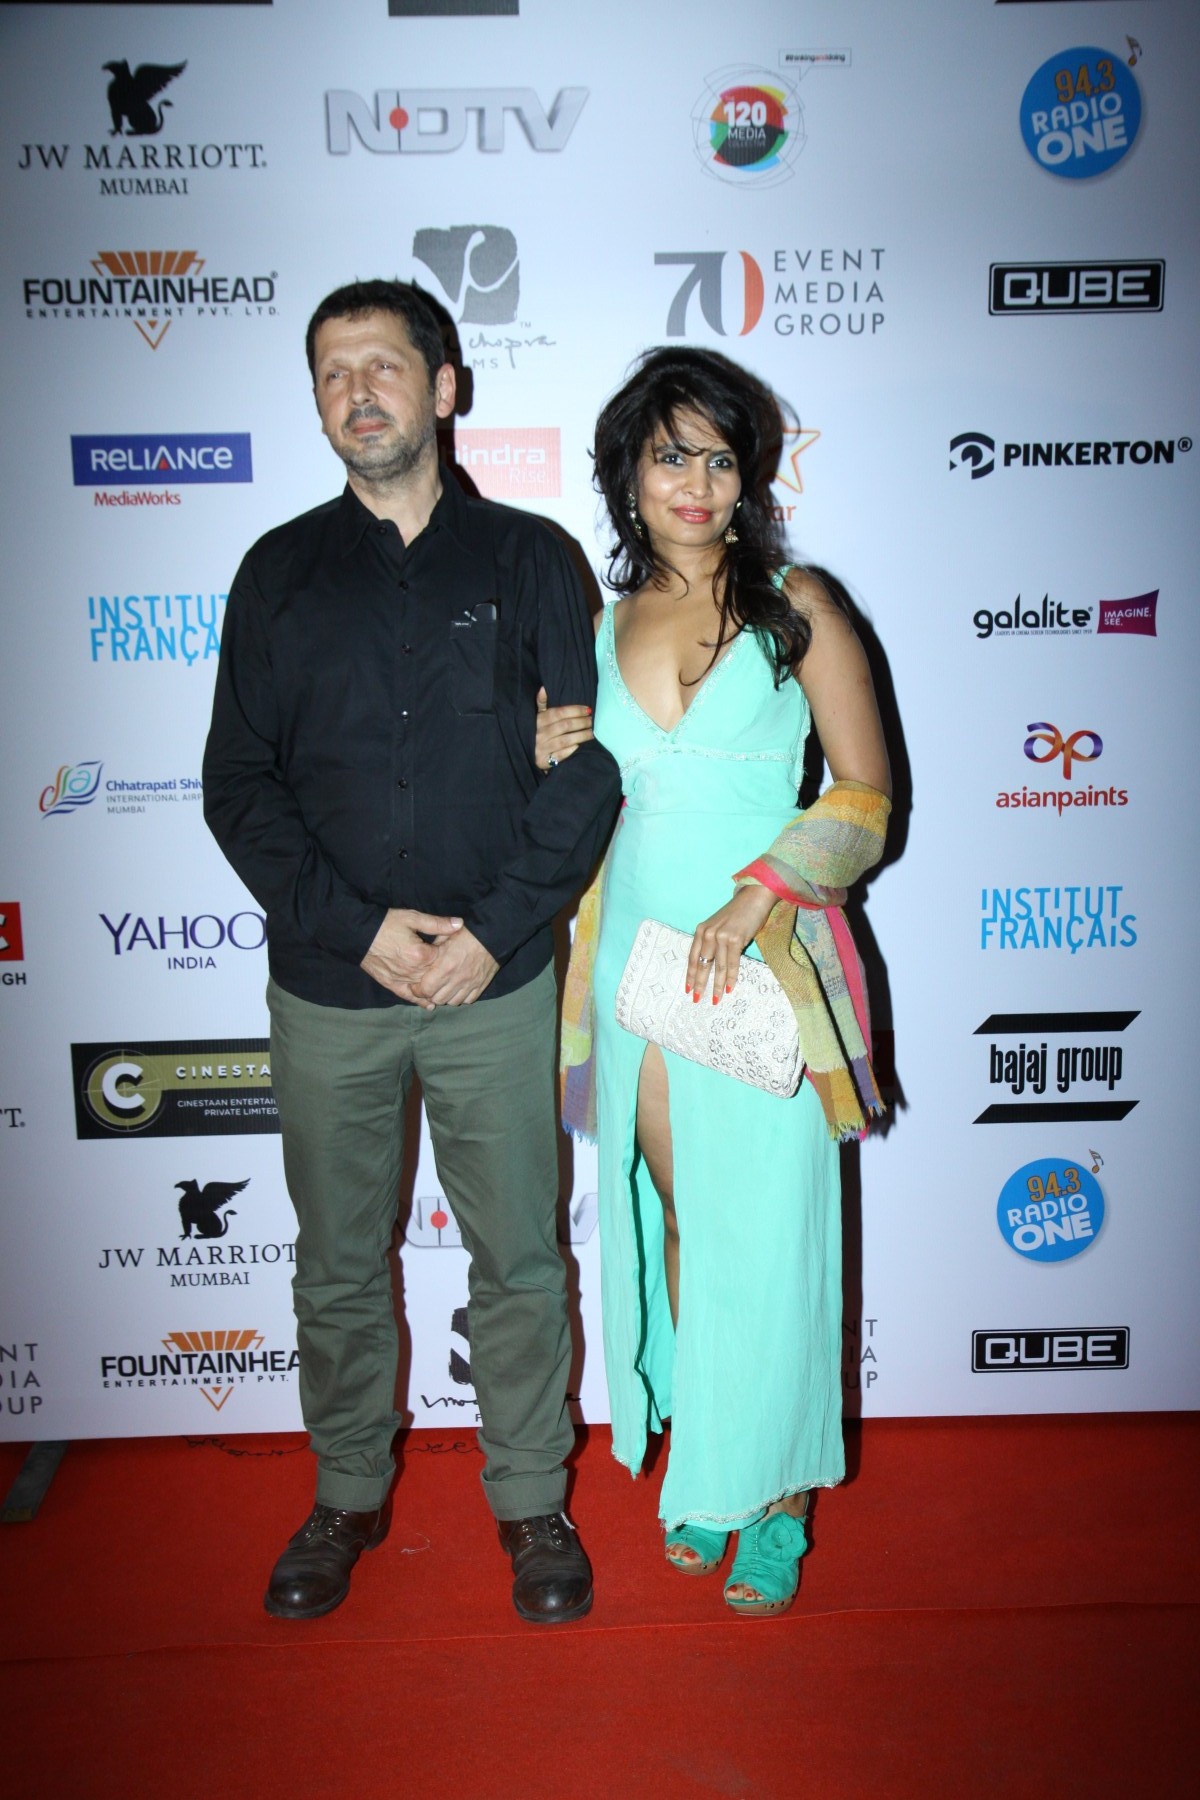 Celebs At 16th Mumbai Film Festival Opening Ceremony